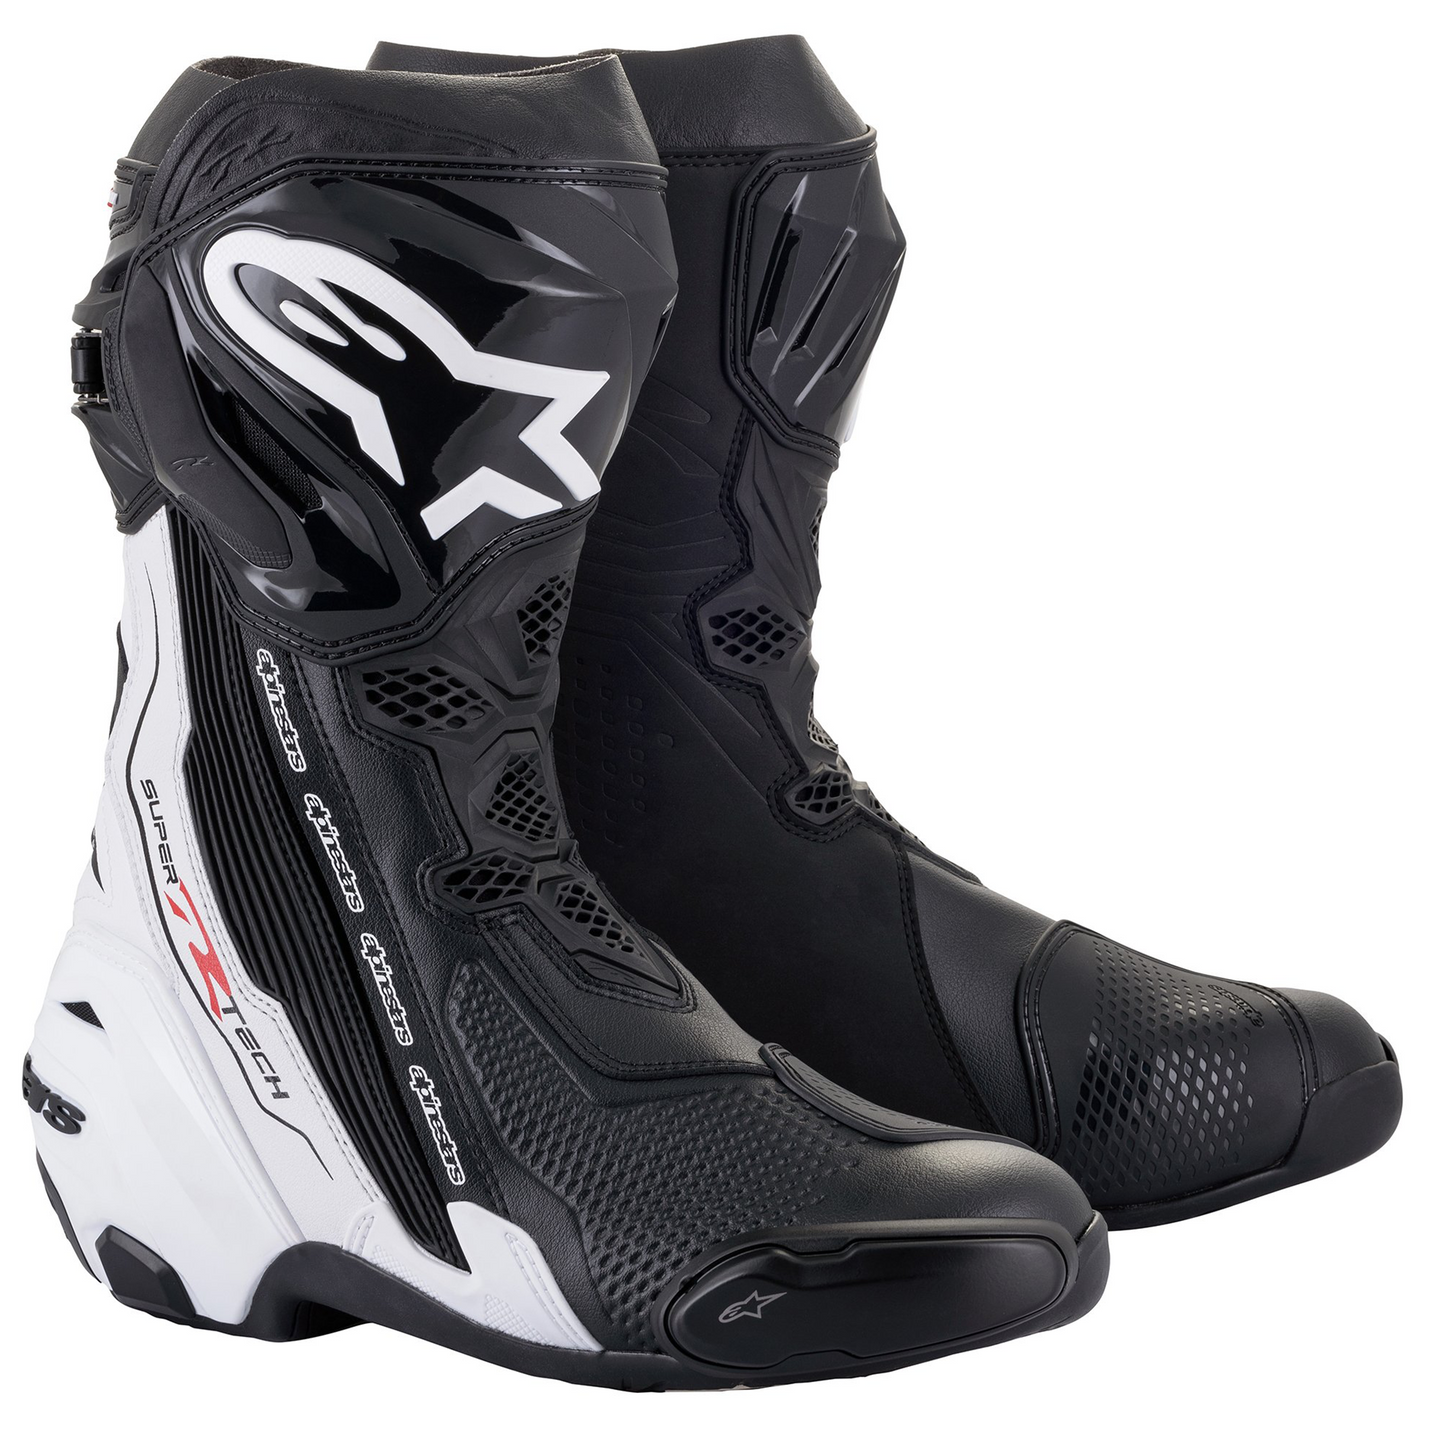 Alpinestars Supertech R Boots (Latest Version) - Black/White